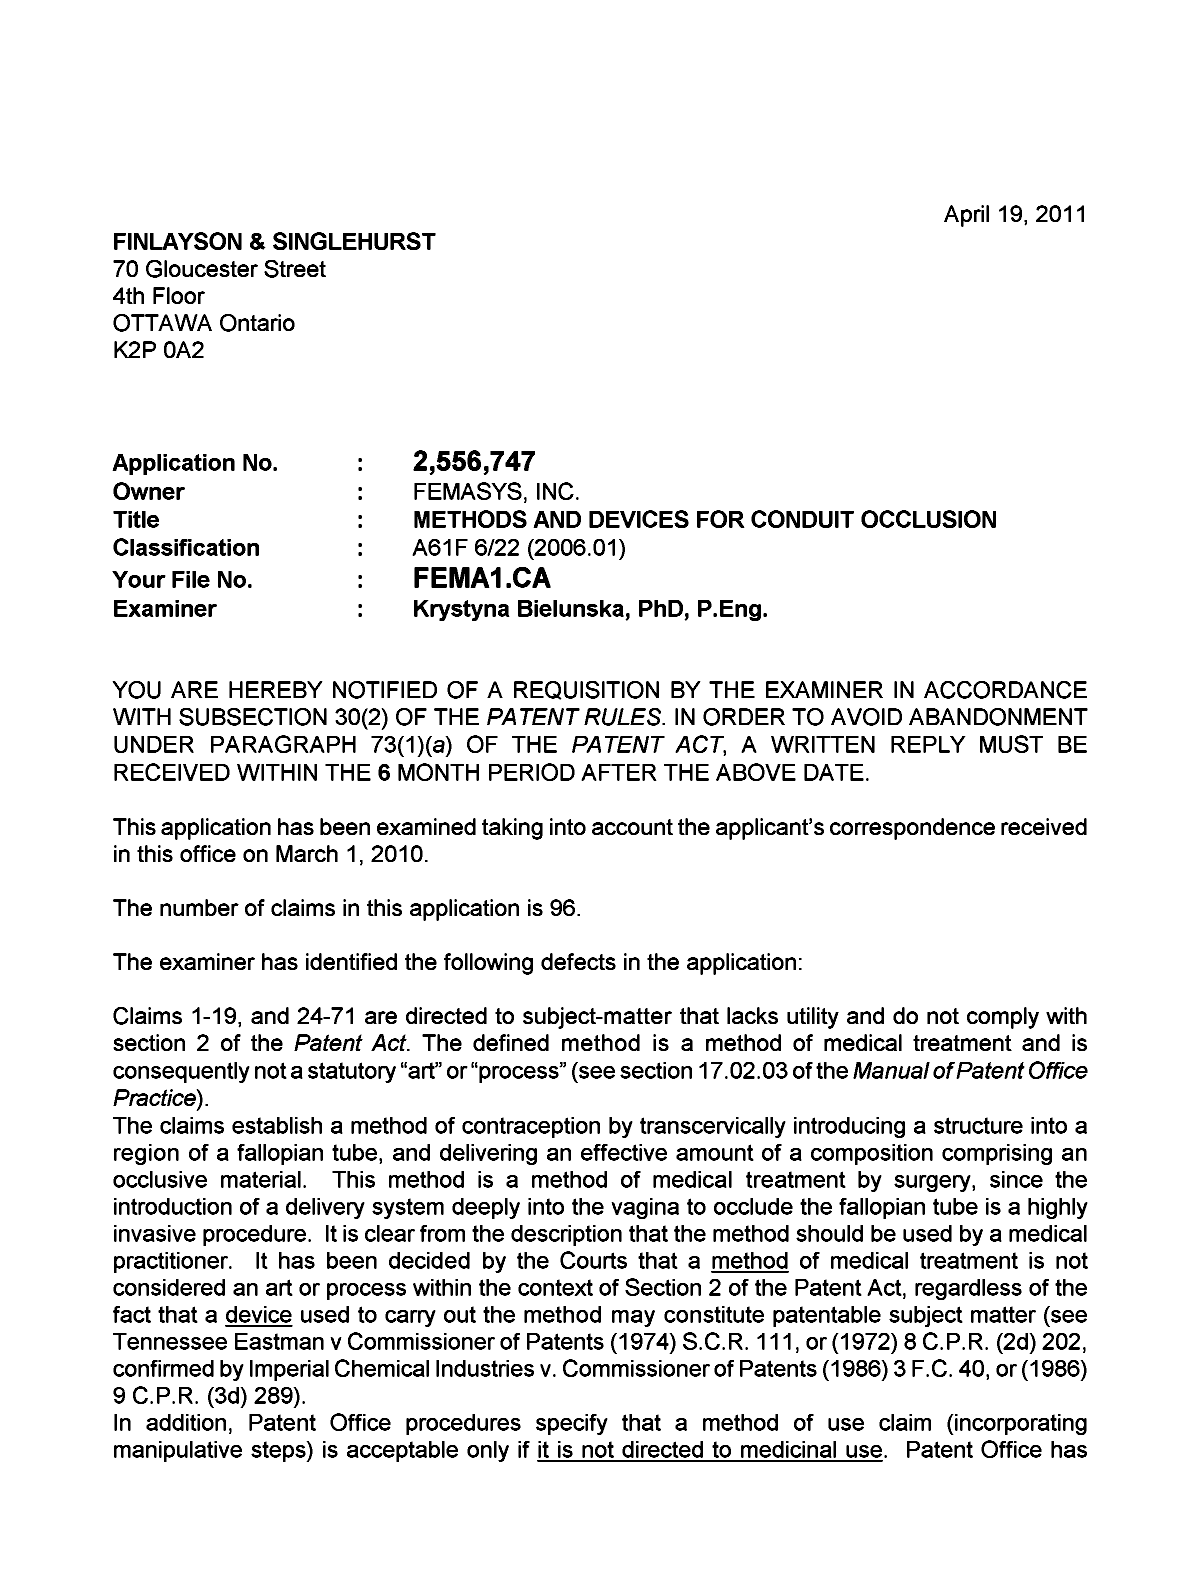 Canadian Patent Document 2556747. Prosecution-Amendment 20110419. Image 1 of 3